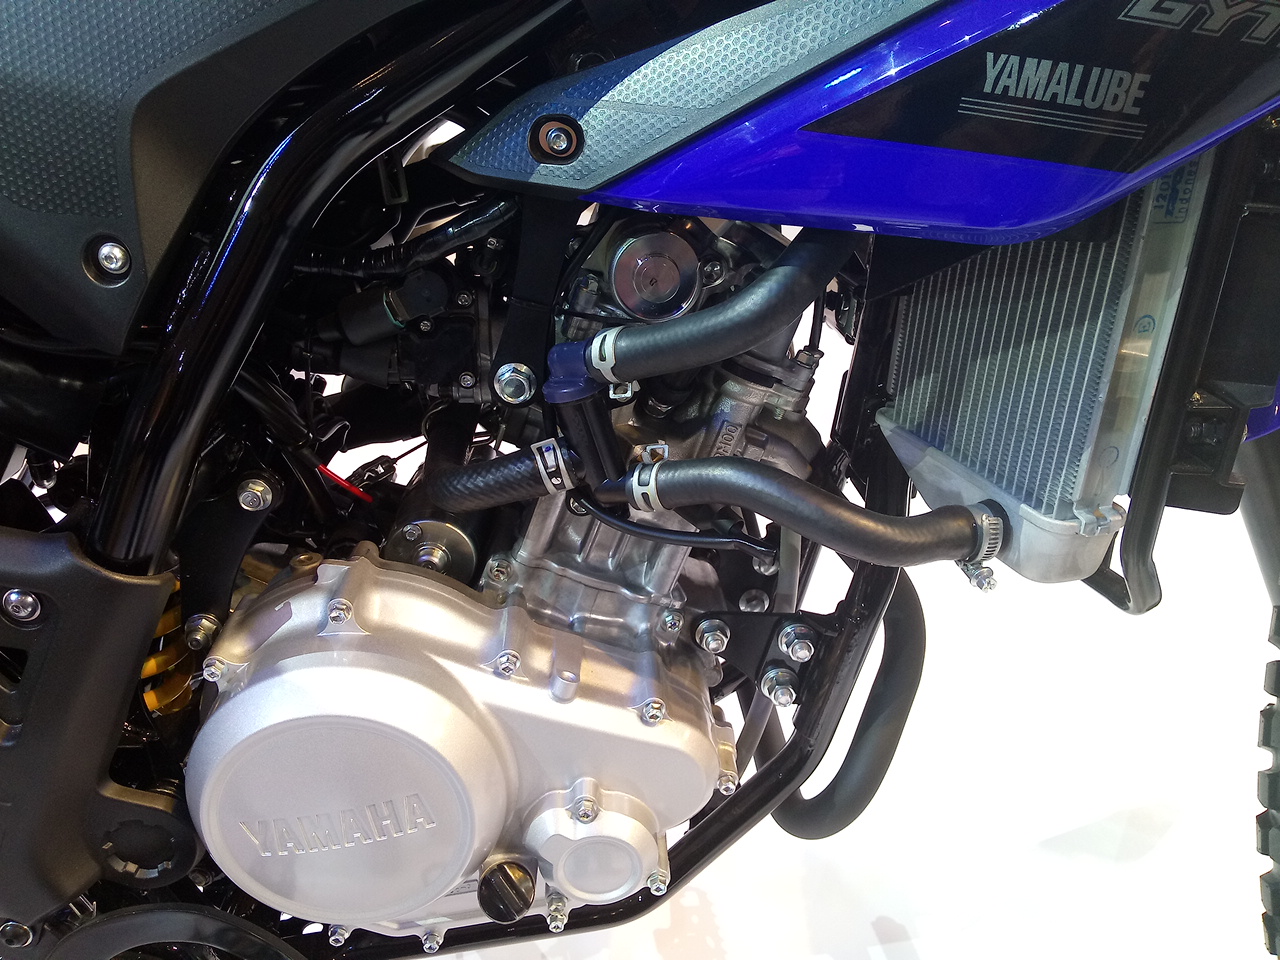 Yamaha WR155R VVA Diluncurkan